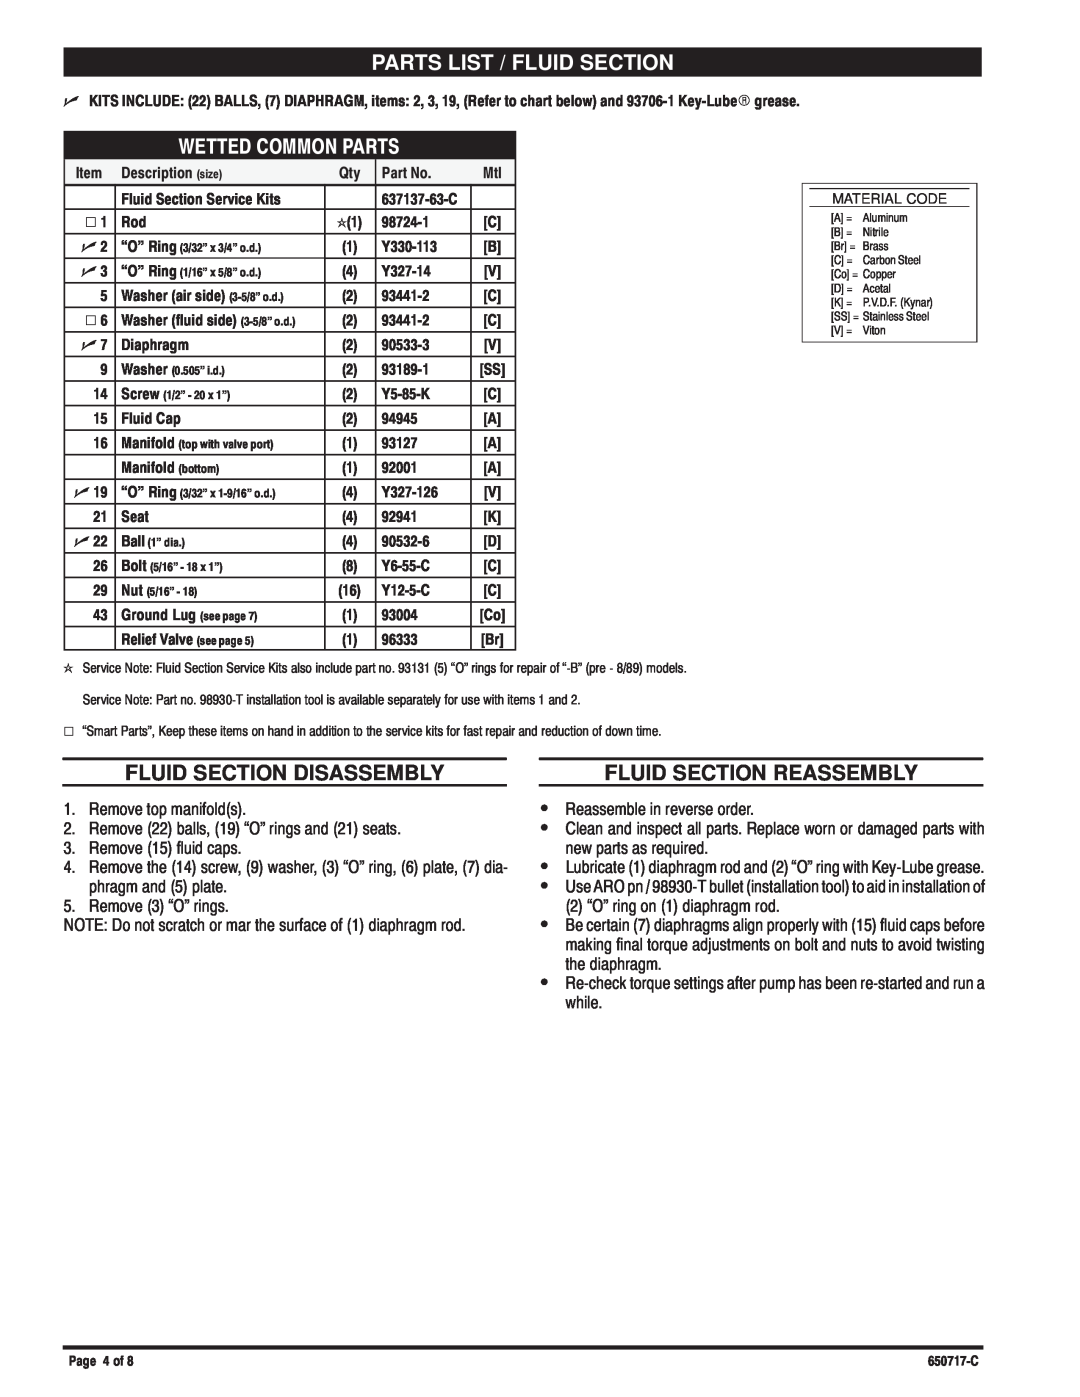 Ingersoll-Rand 650717-C Parts List / Fluid Section, Fluid Section Disassembly, Fluid Section Reassembly, S S S S S, n n k 